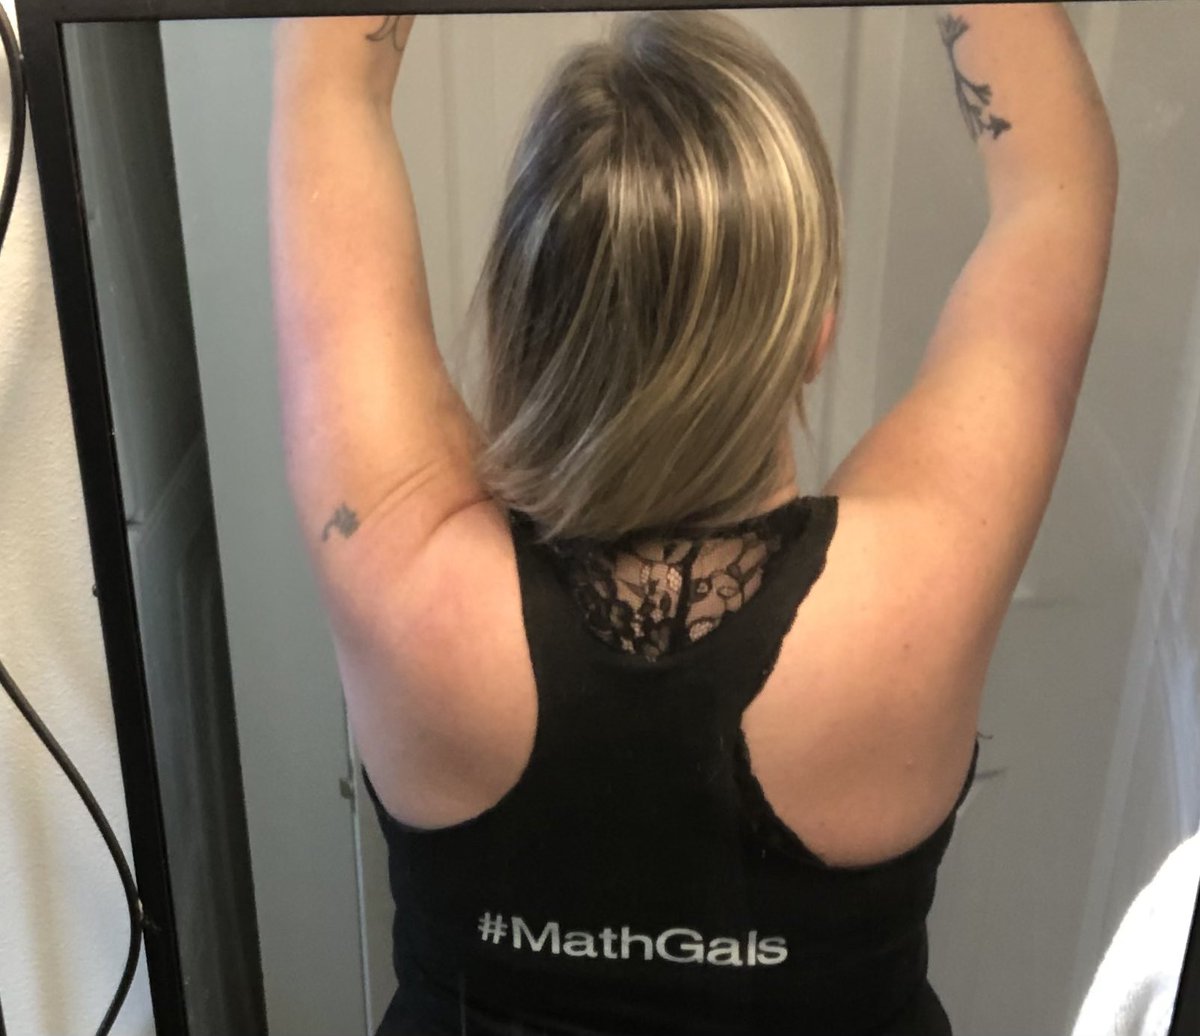 Celebrating #WomenInMath day with my #MathGals shirt 💪